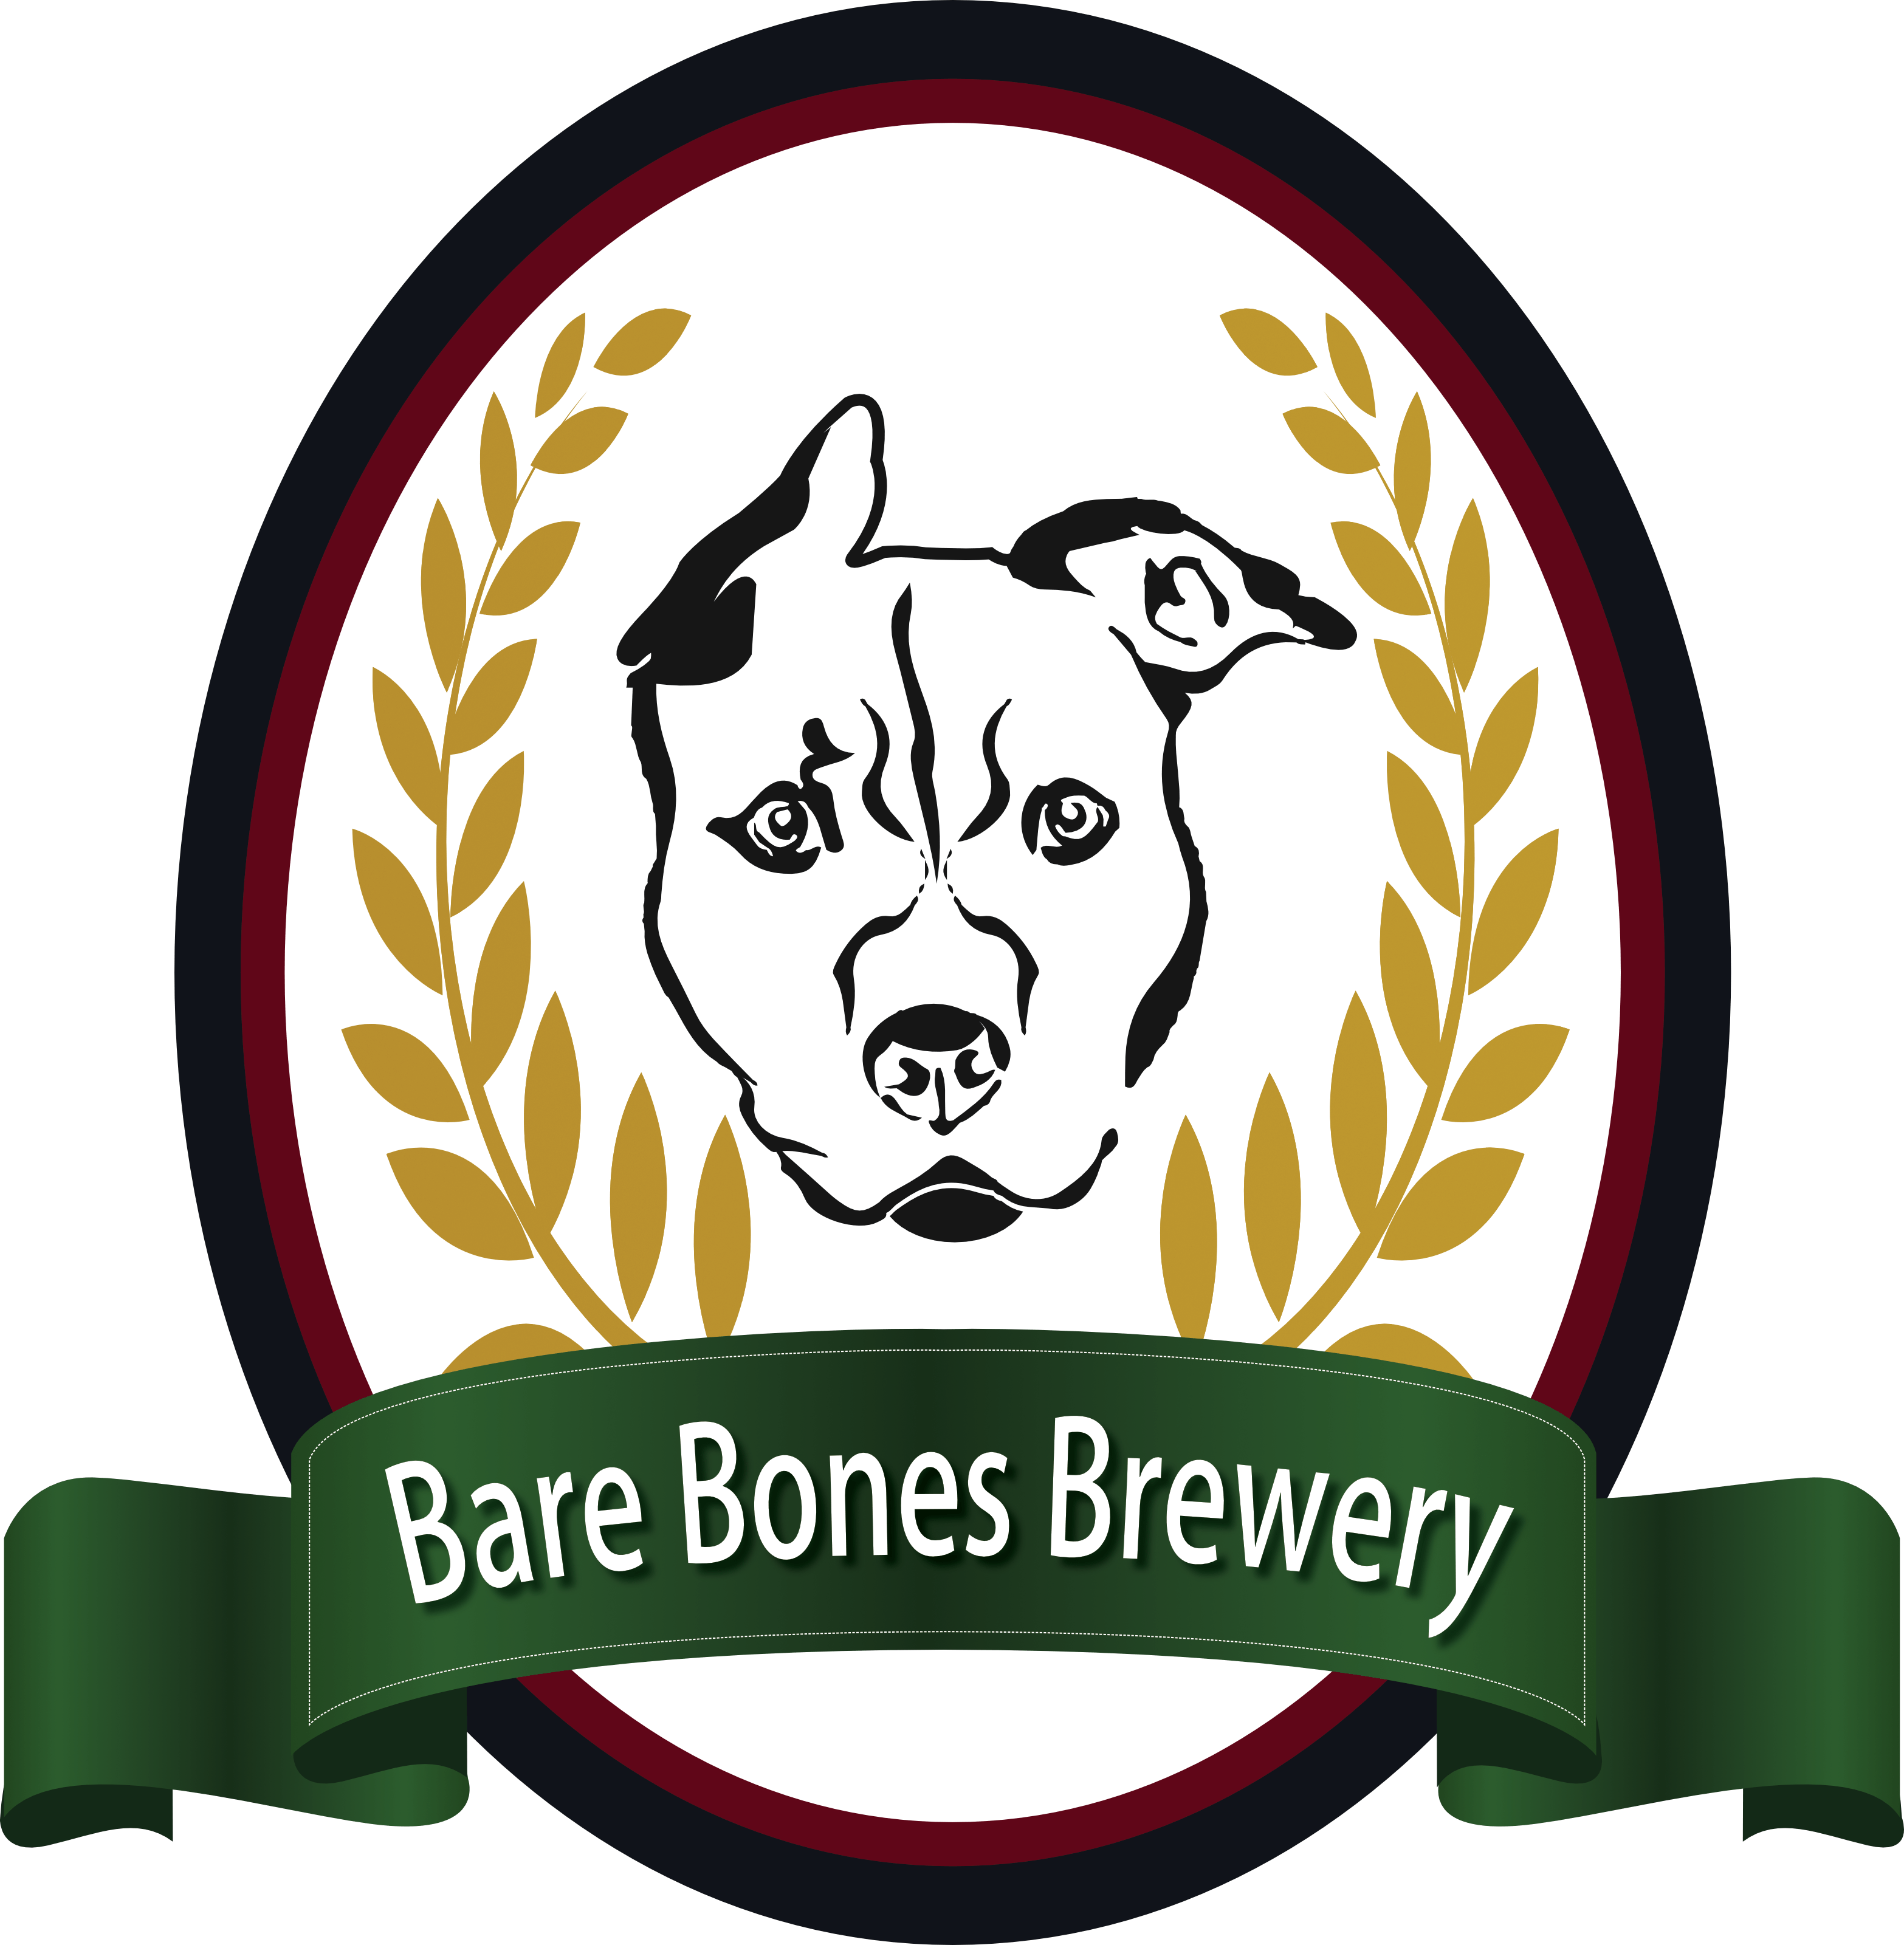 Barebones Logo - Bare Bones Brewery On Tap